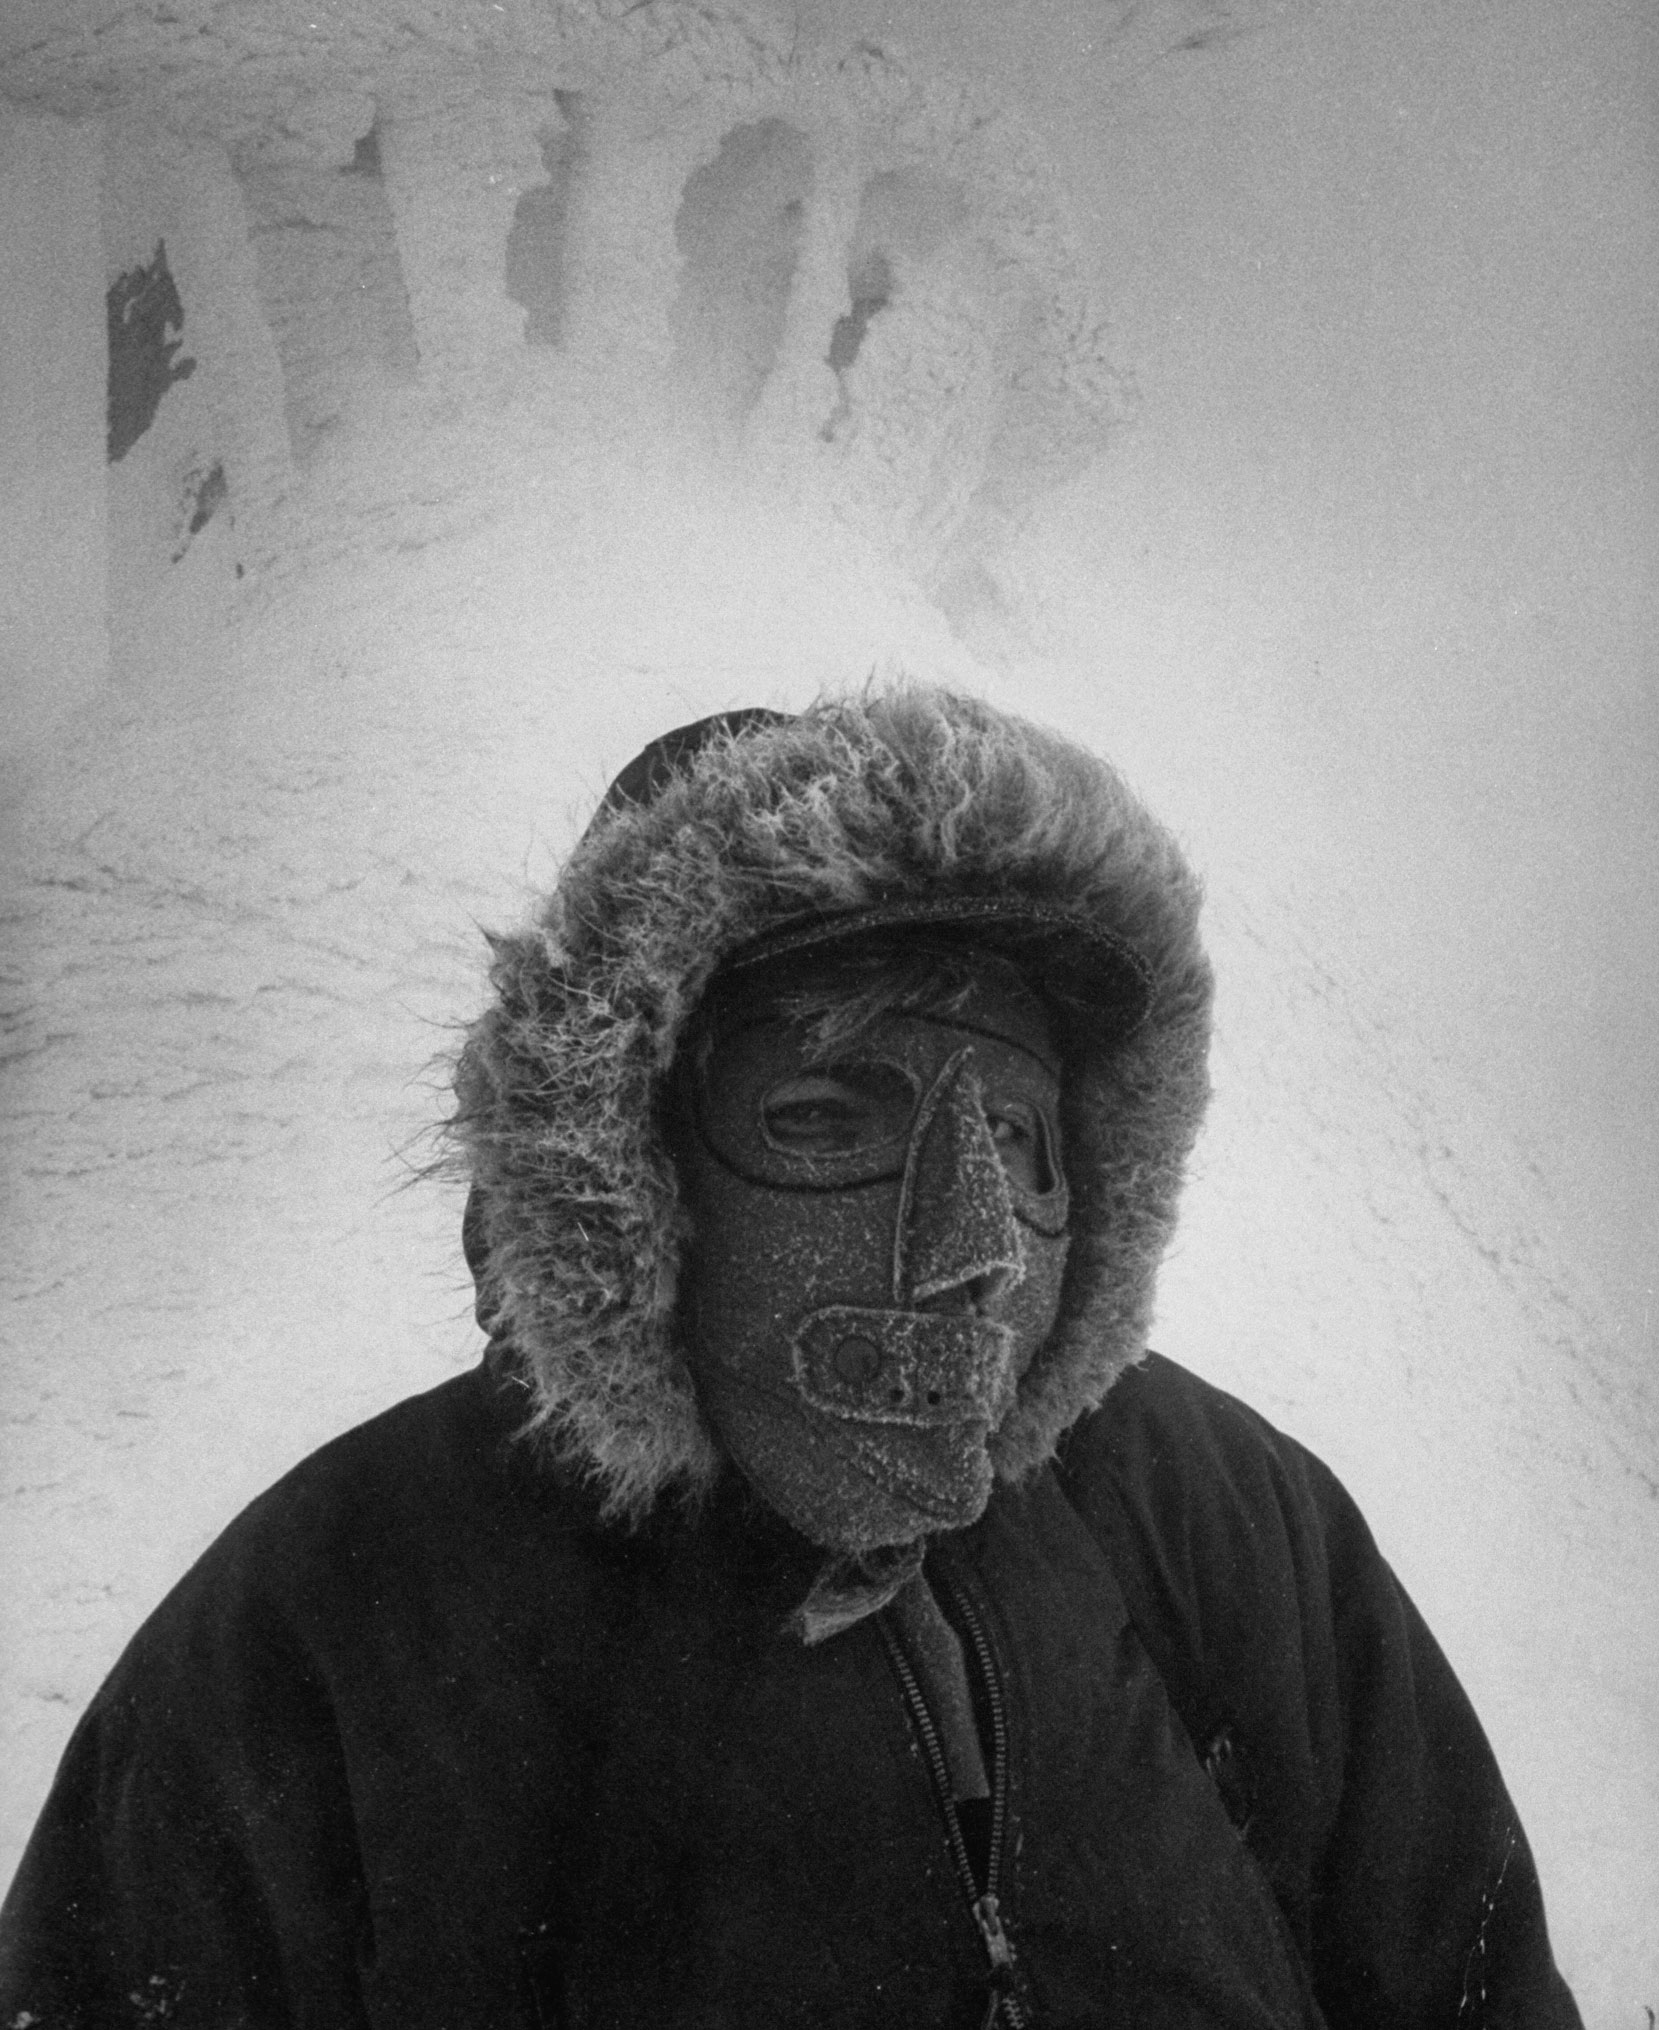 Hooded weather-study team member, New Hampshire's Mount Washington, 1953.